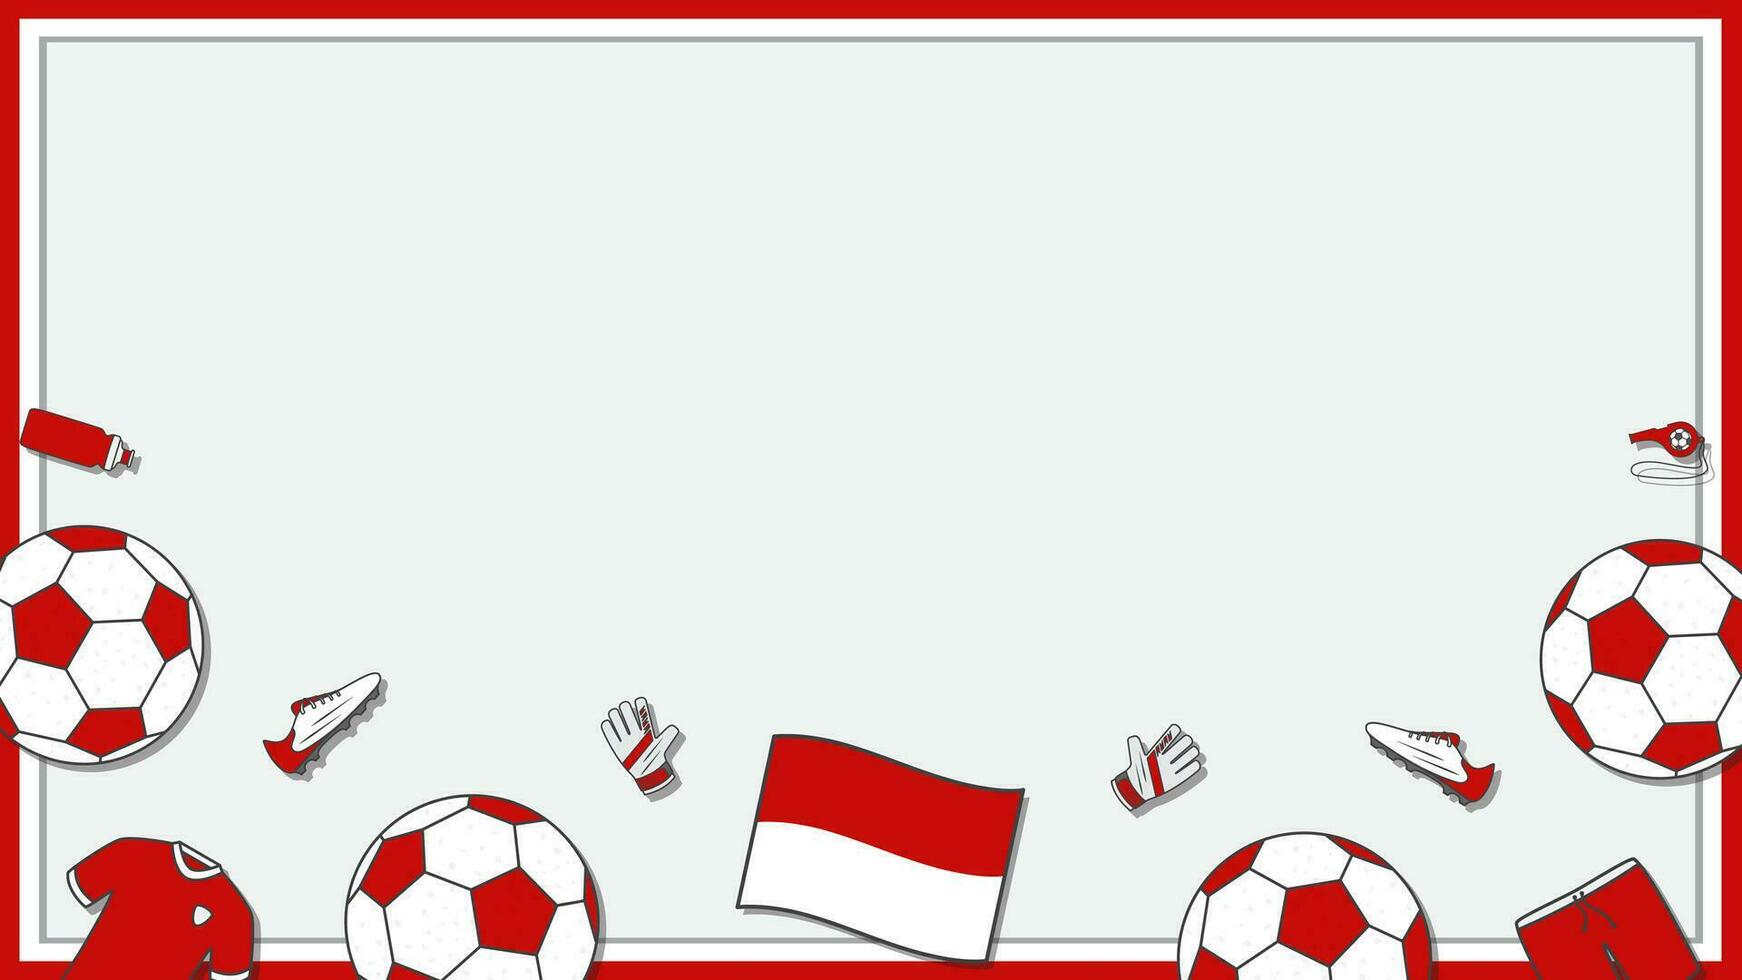 Football Background Design Template. Football Cartoon Vector Illustration. Soccer In Indonesia